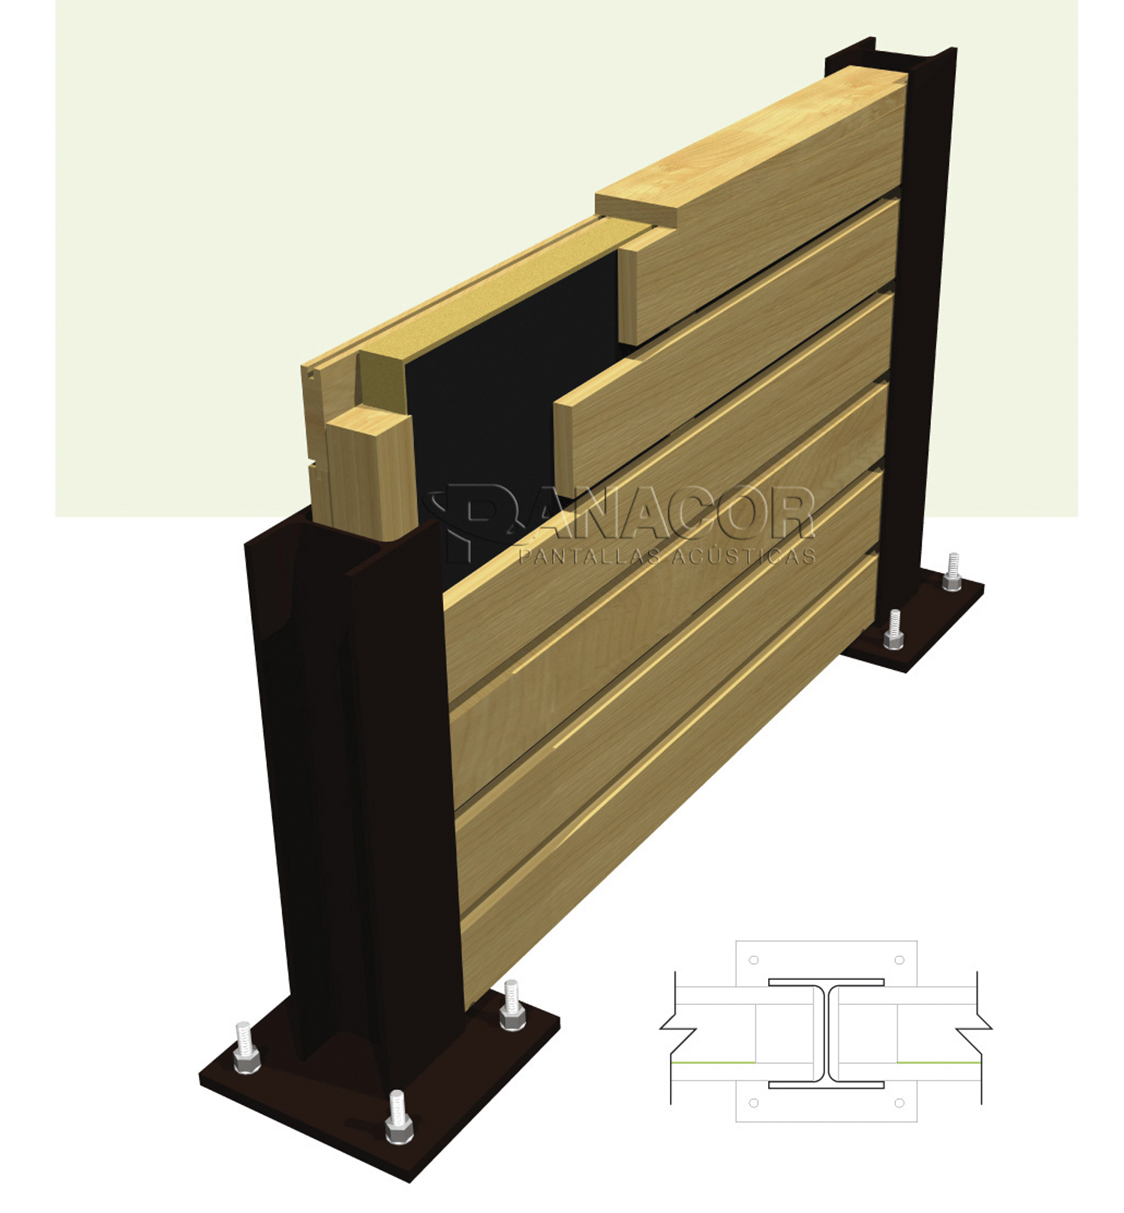 Wooden acoustic barriers - Panacor